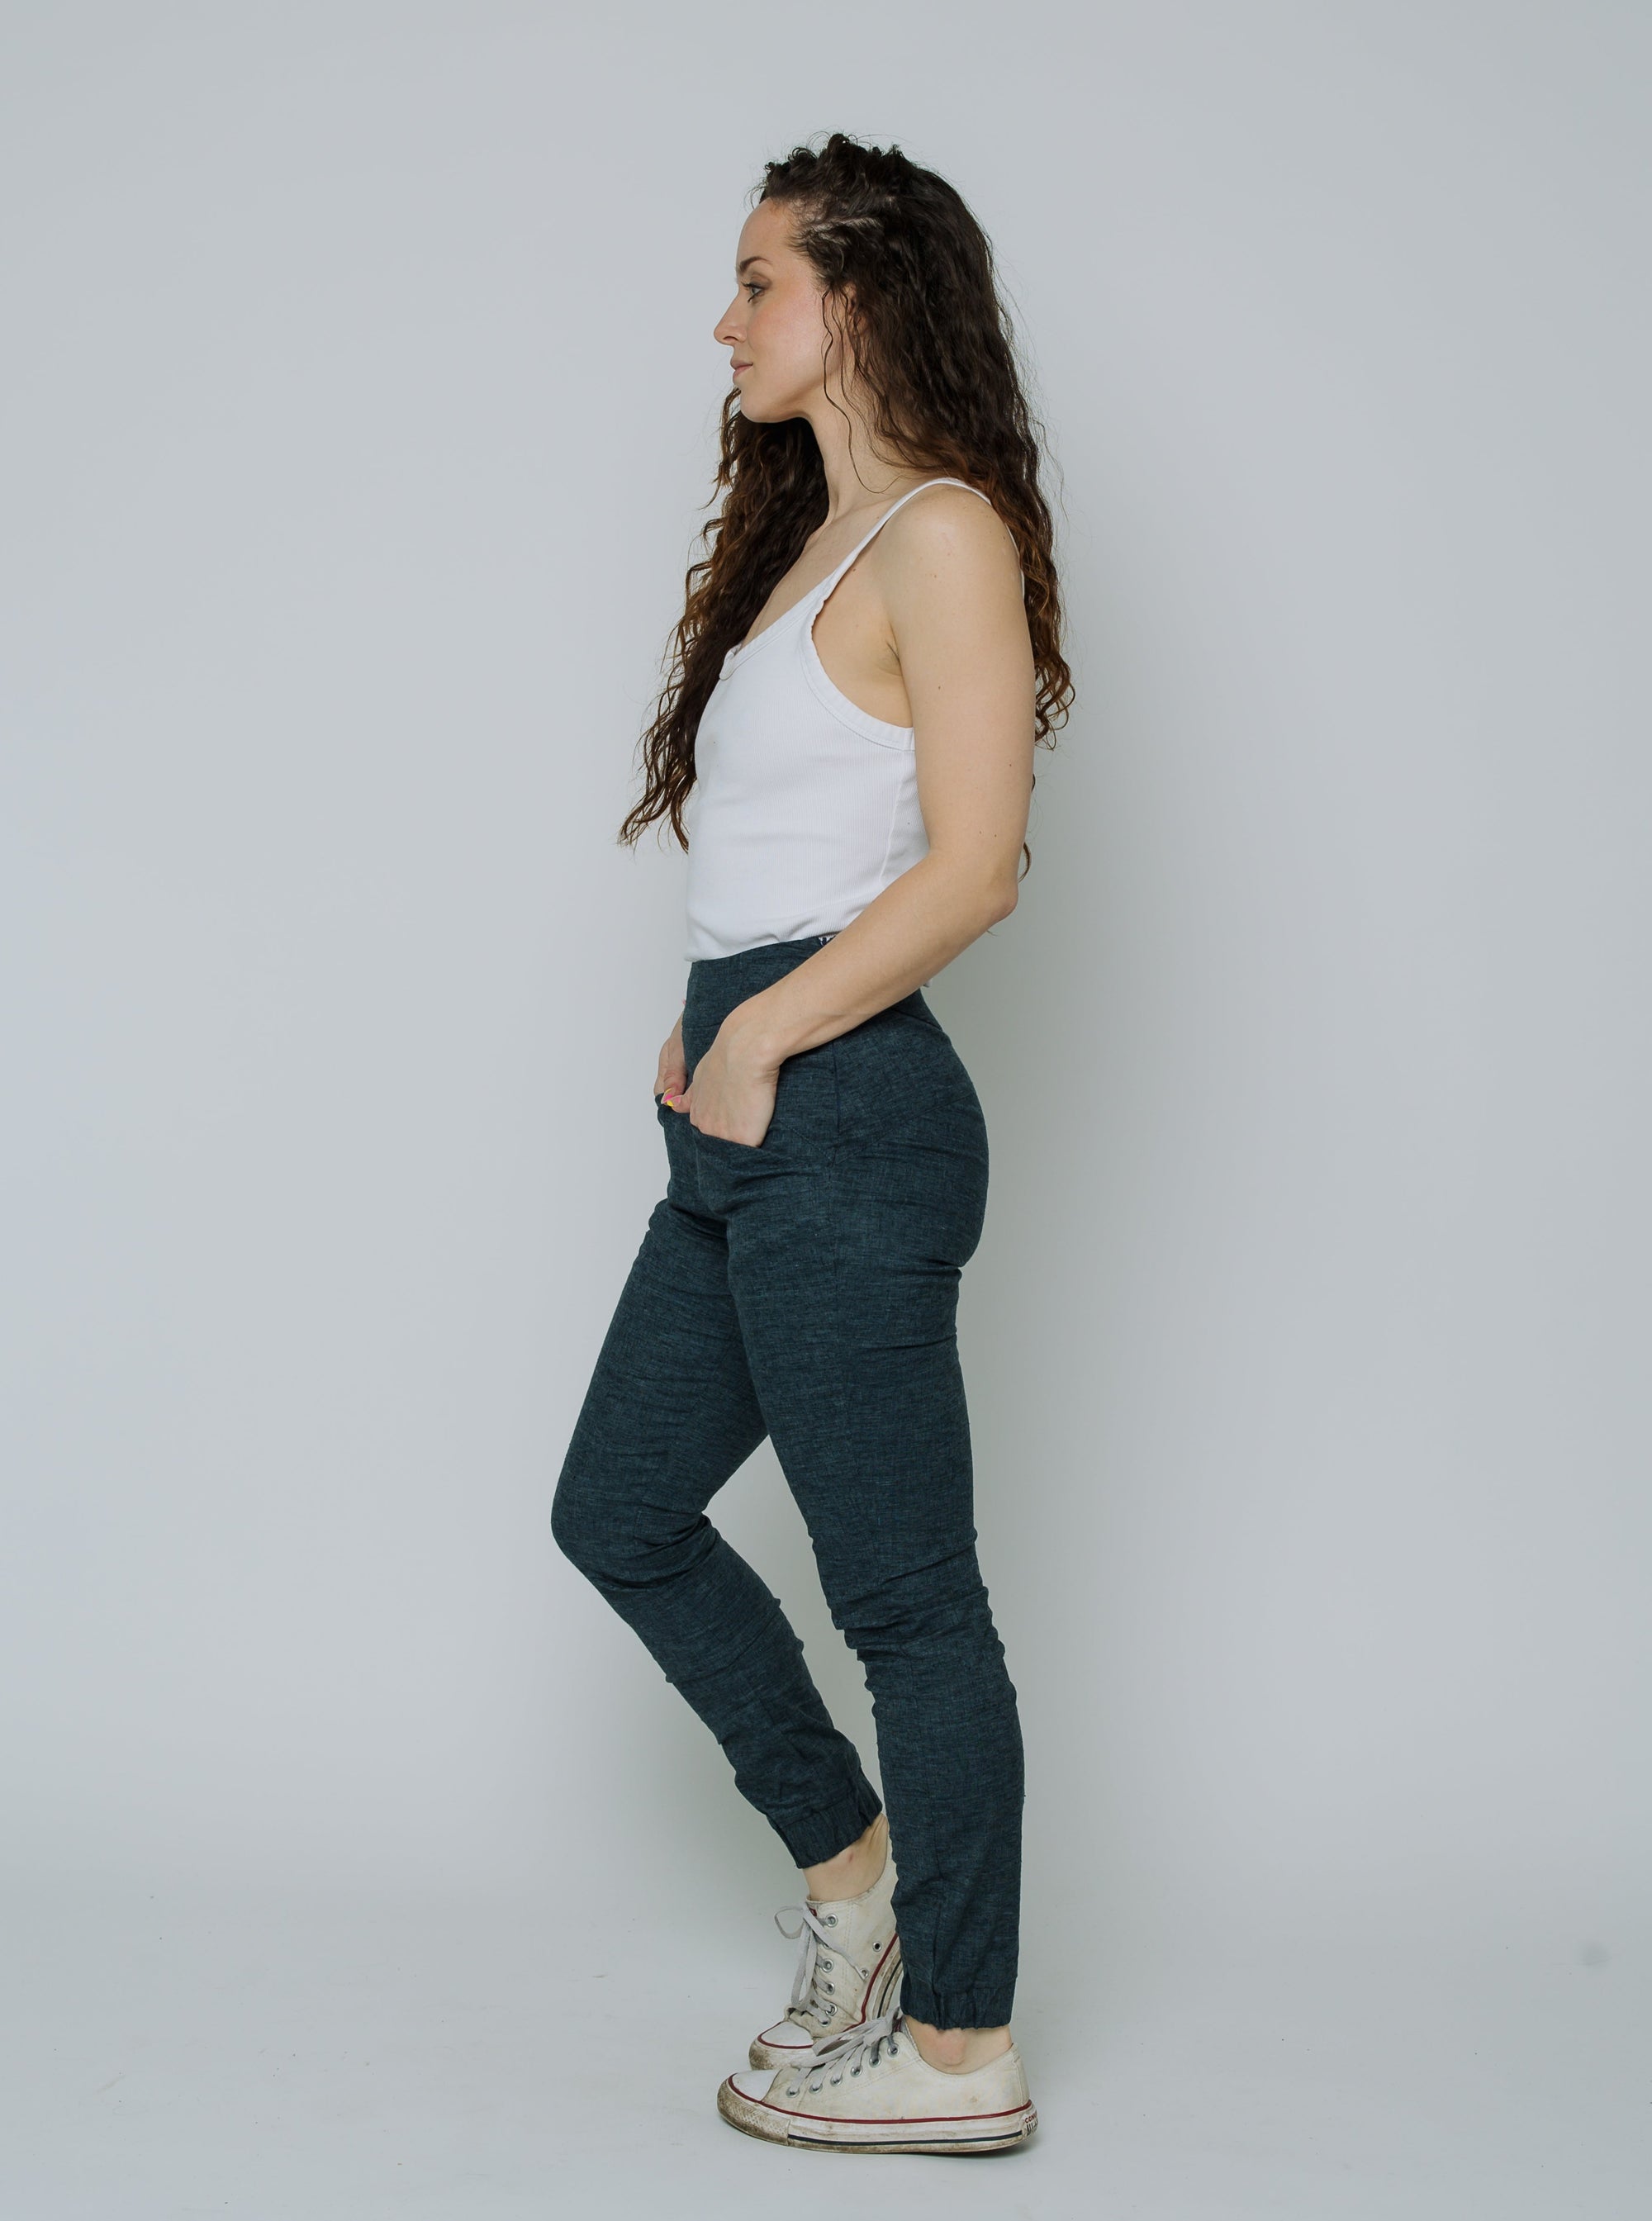 Kristina Cuffed Pants (Navy / Grey Hemp)